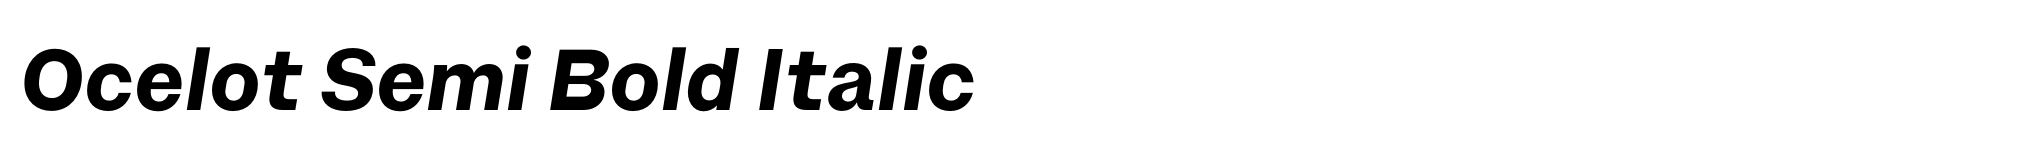 Ocelot Semi Bold Italic image